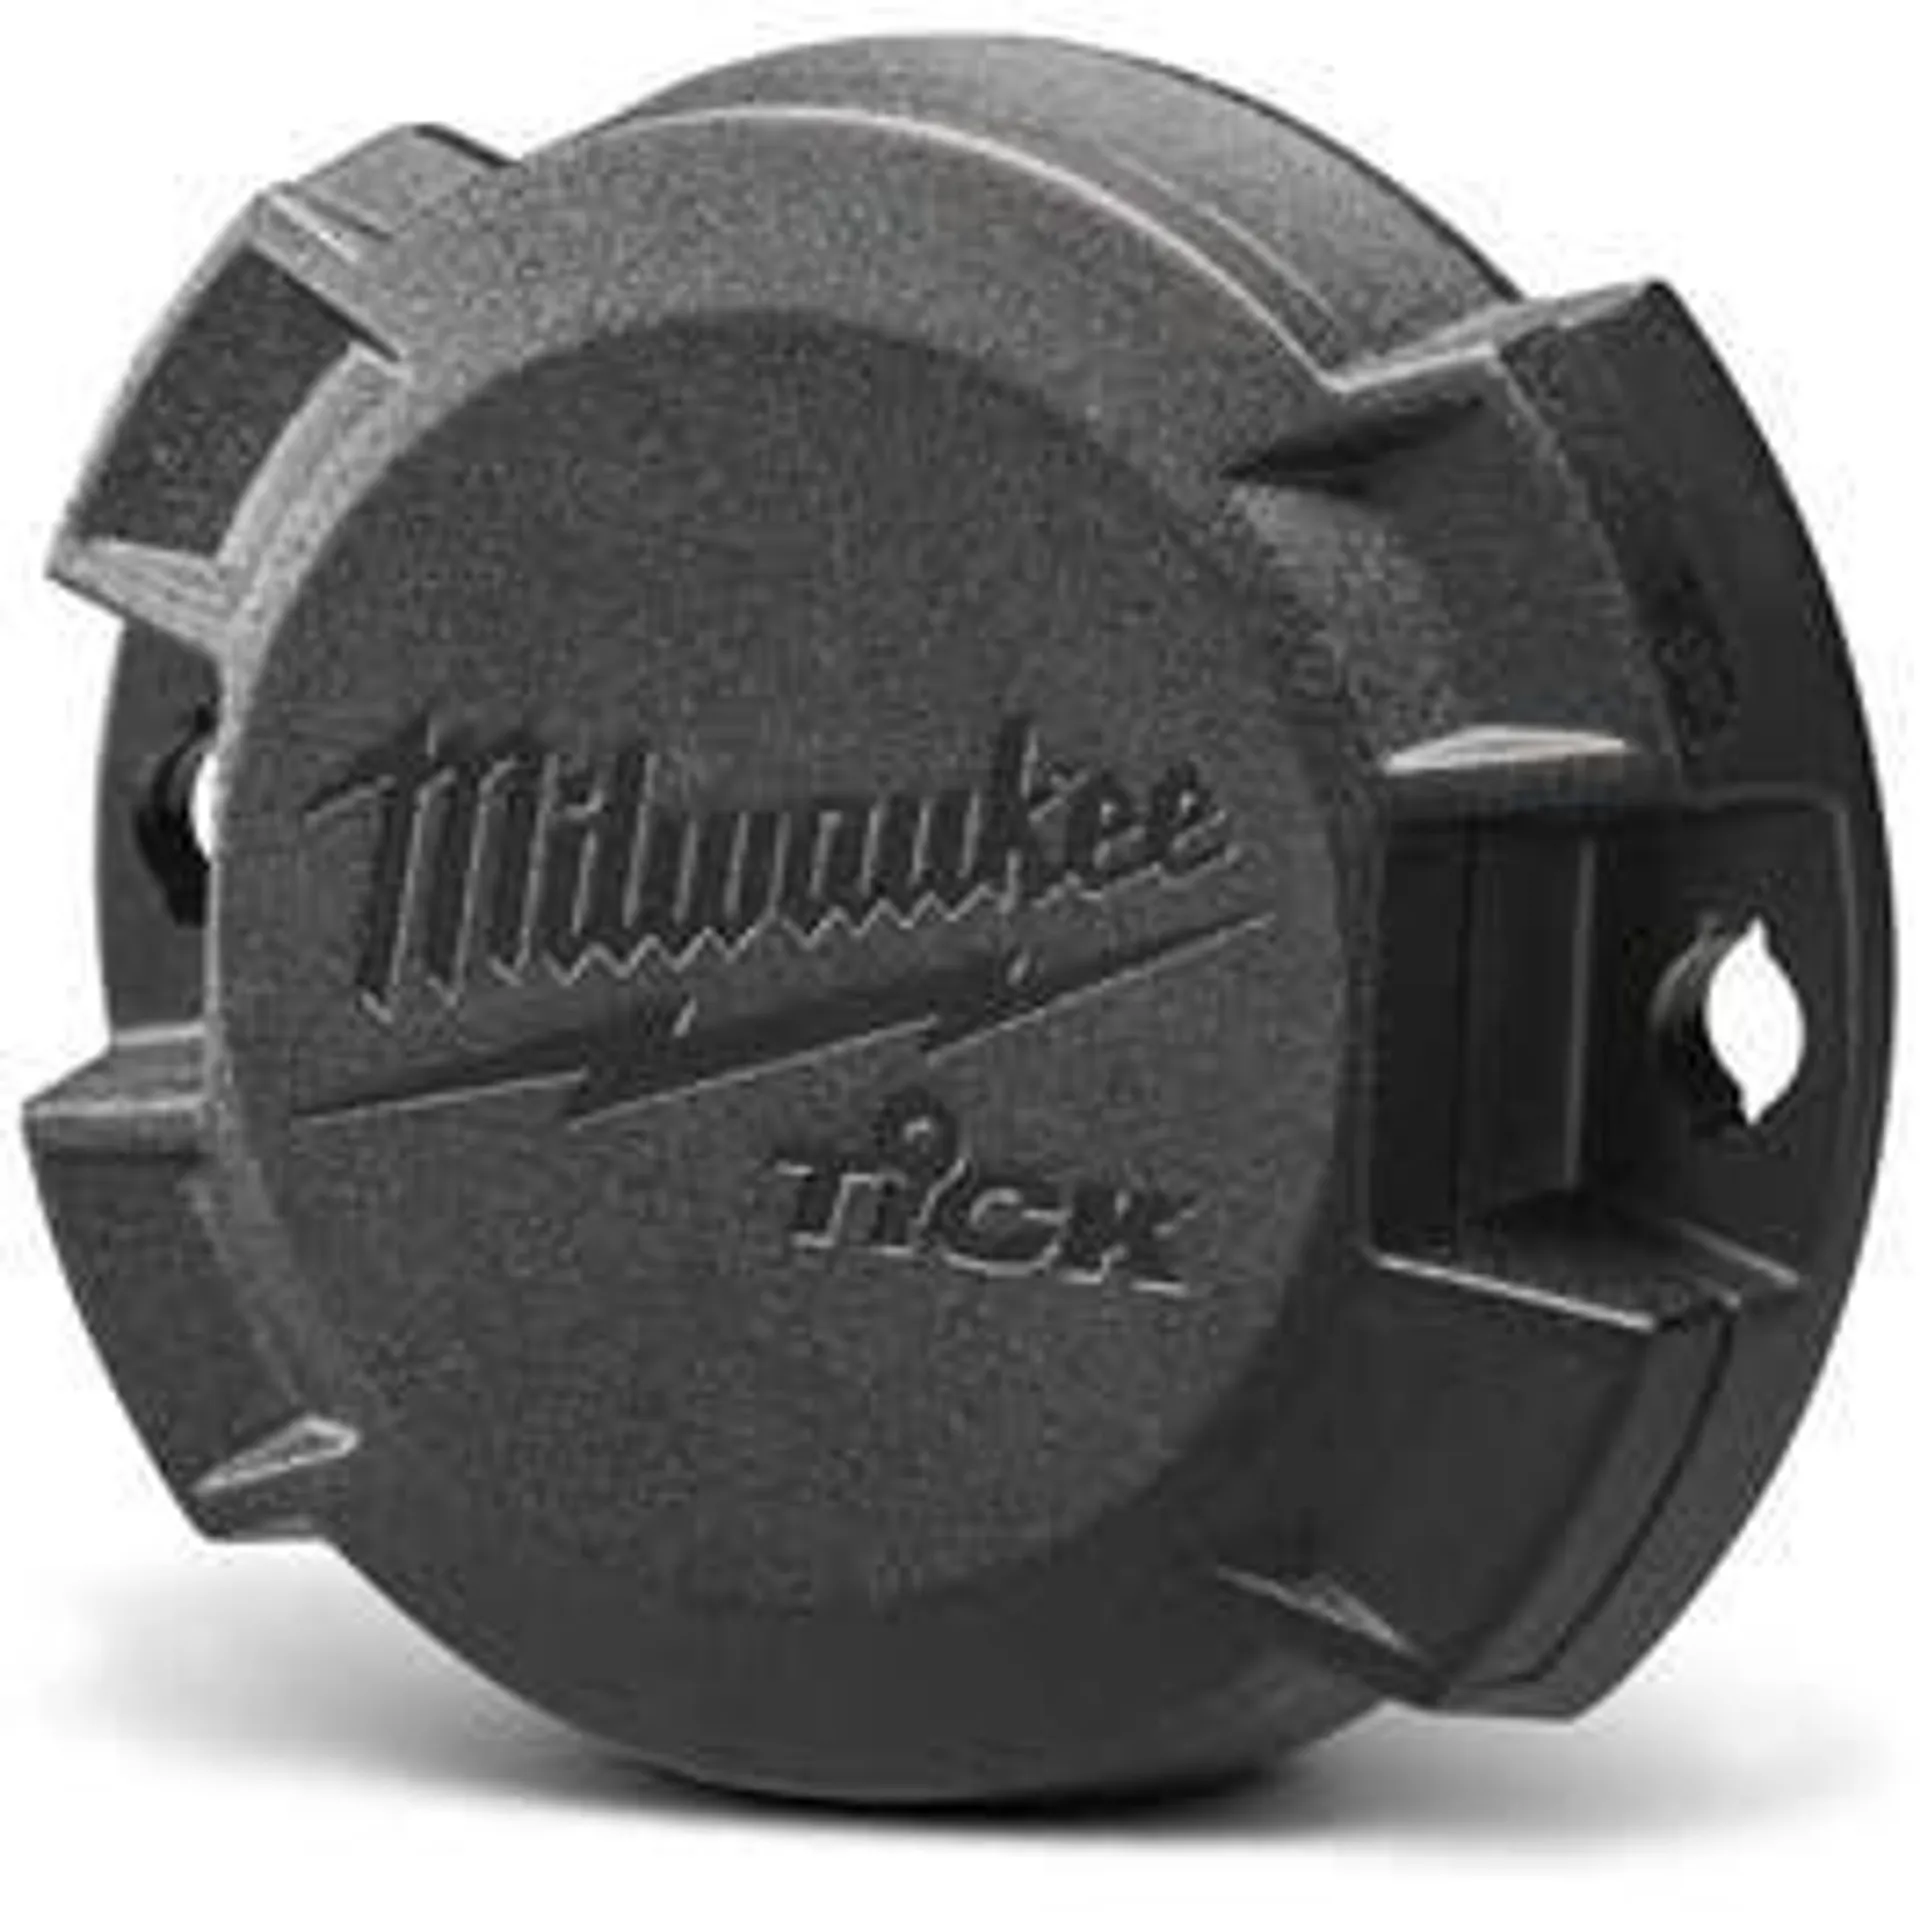 MILWAUKEE One-Key Tick Tracking Tool ONET-1